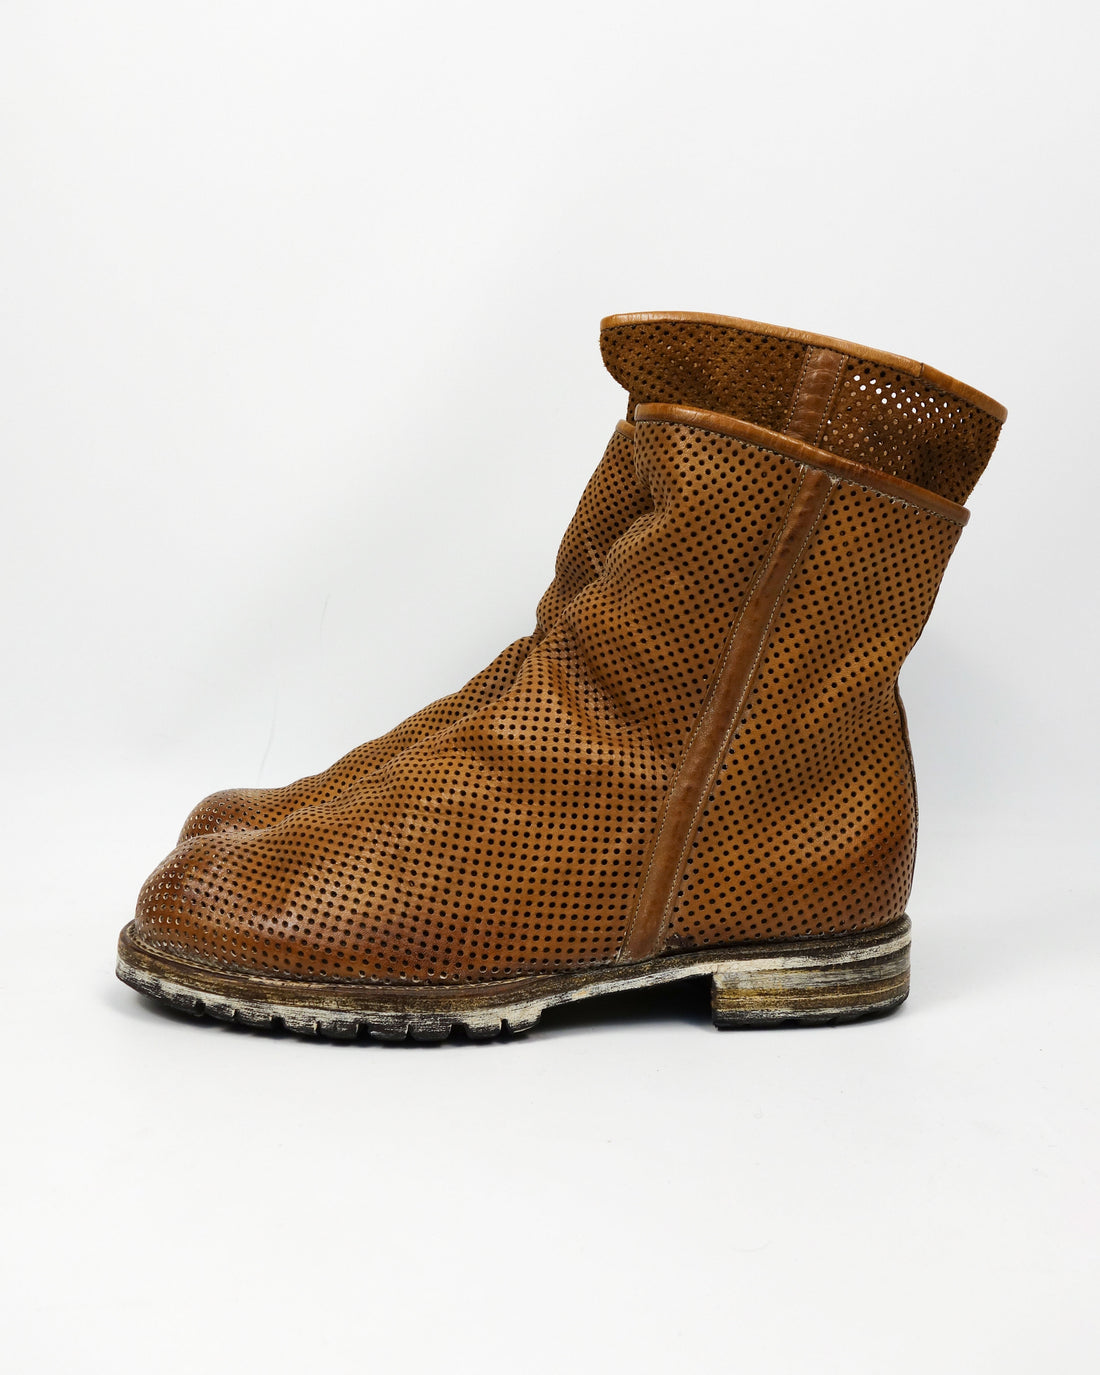 Mihara Yasuhiro Perforated Tan Leather Boots 1990's